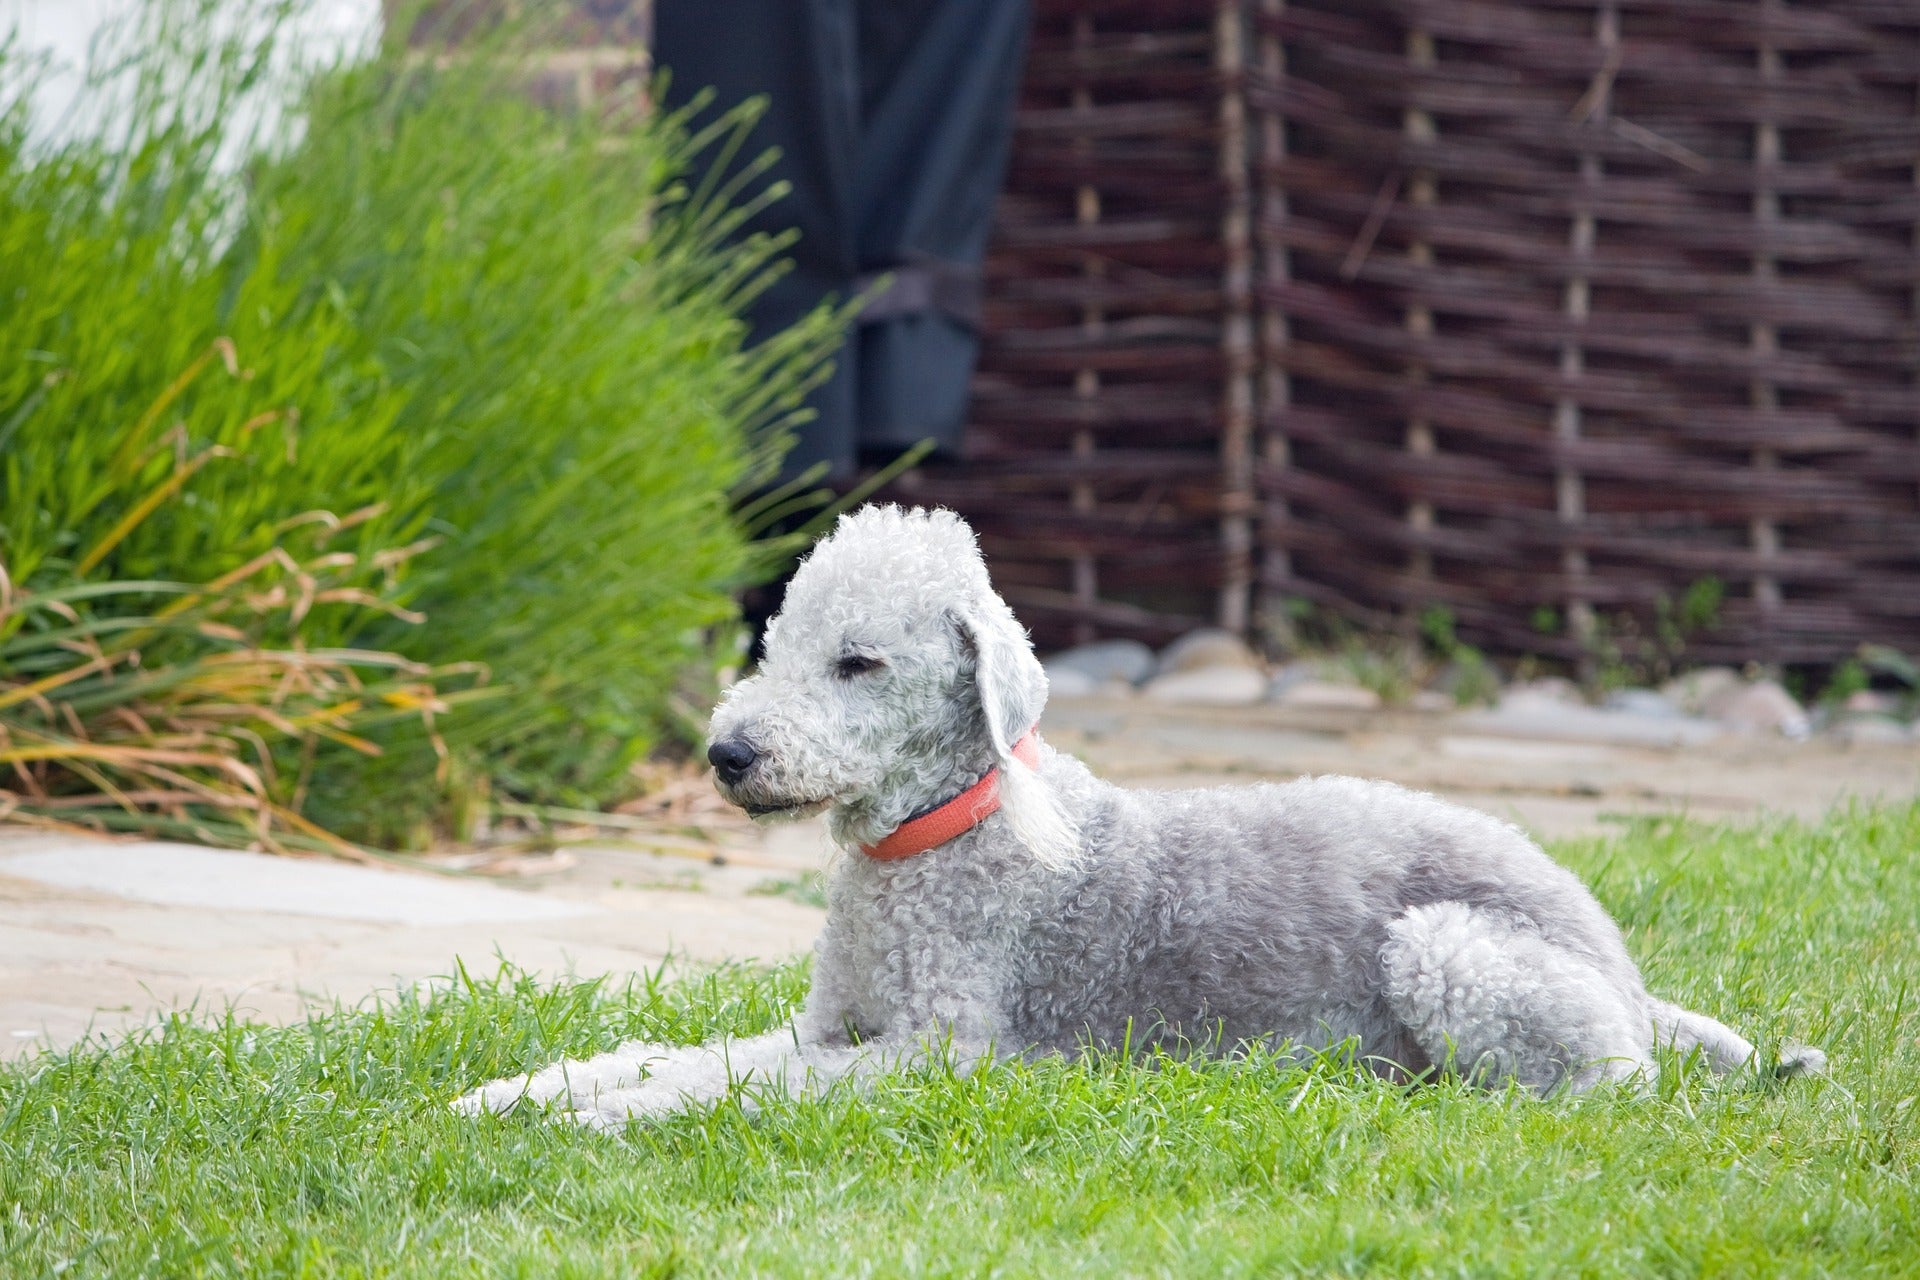 Bedlington terrier in grass.